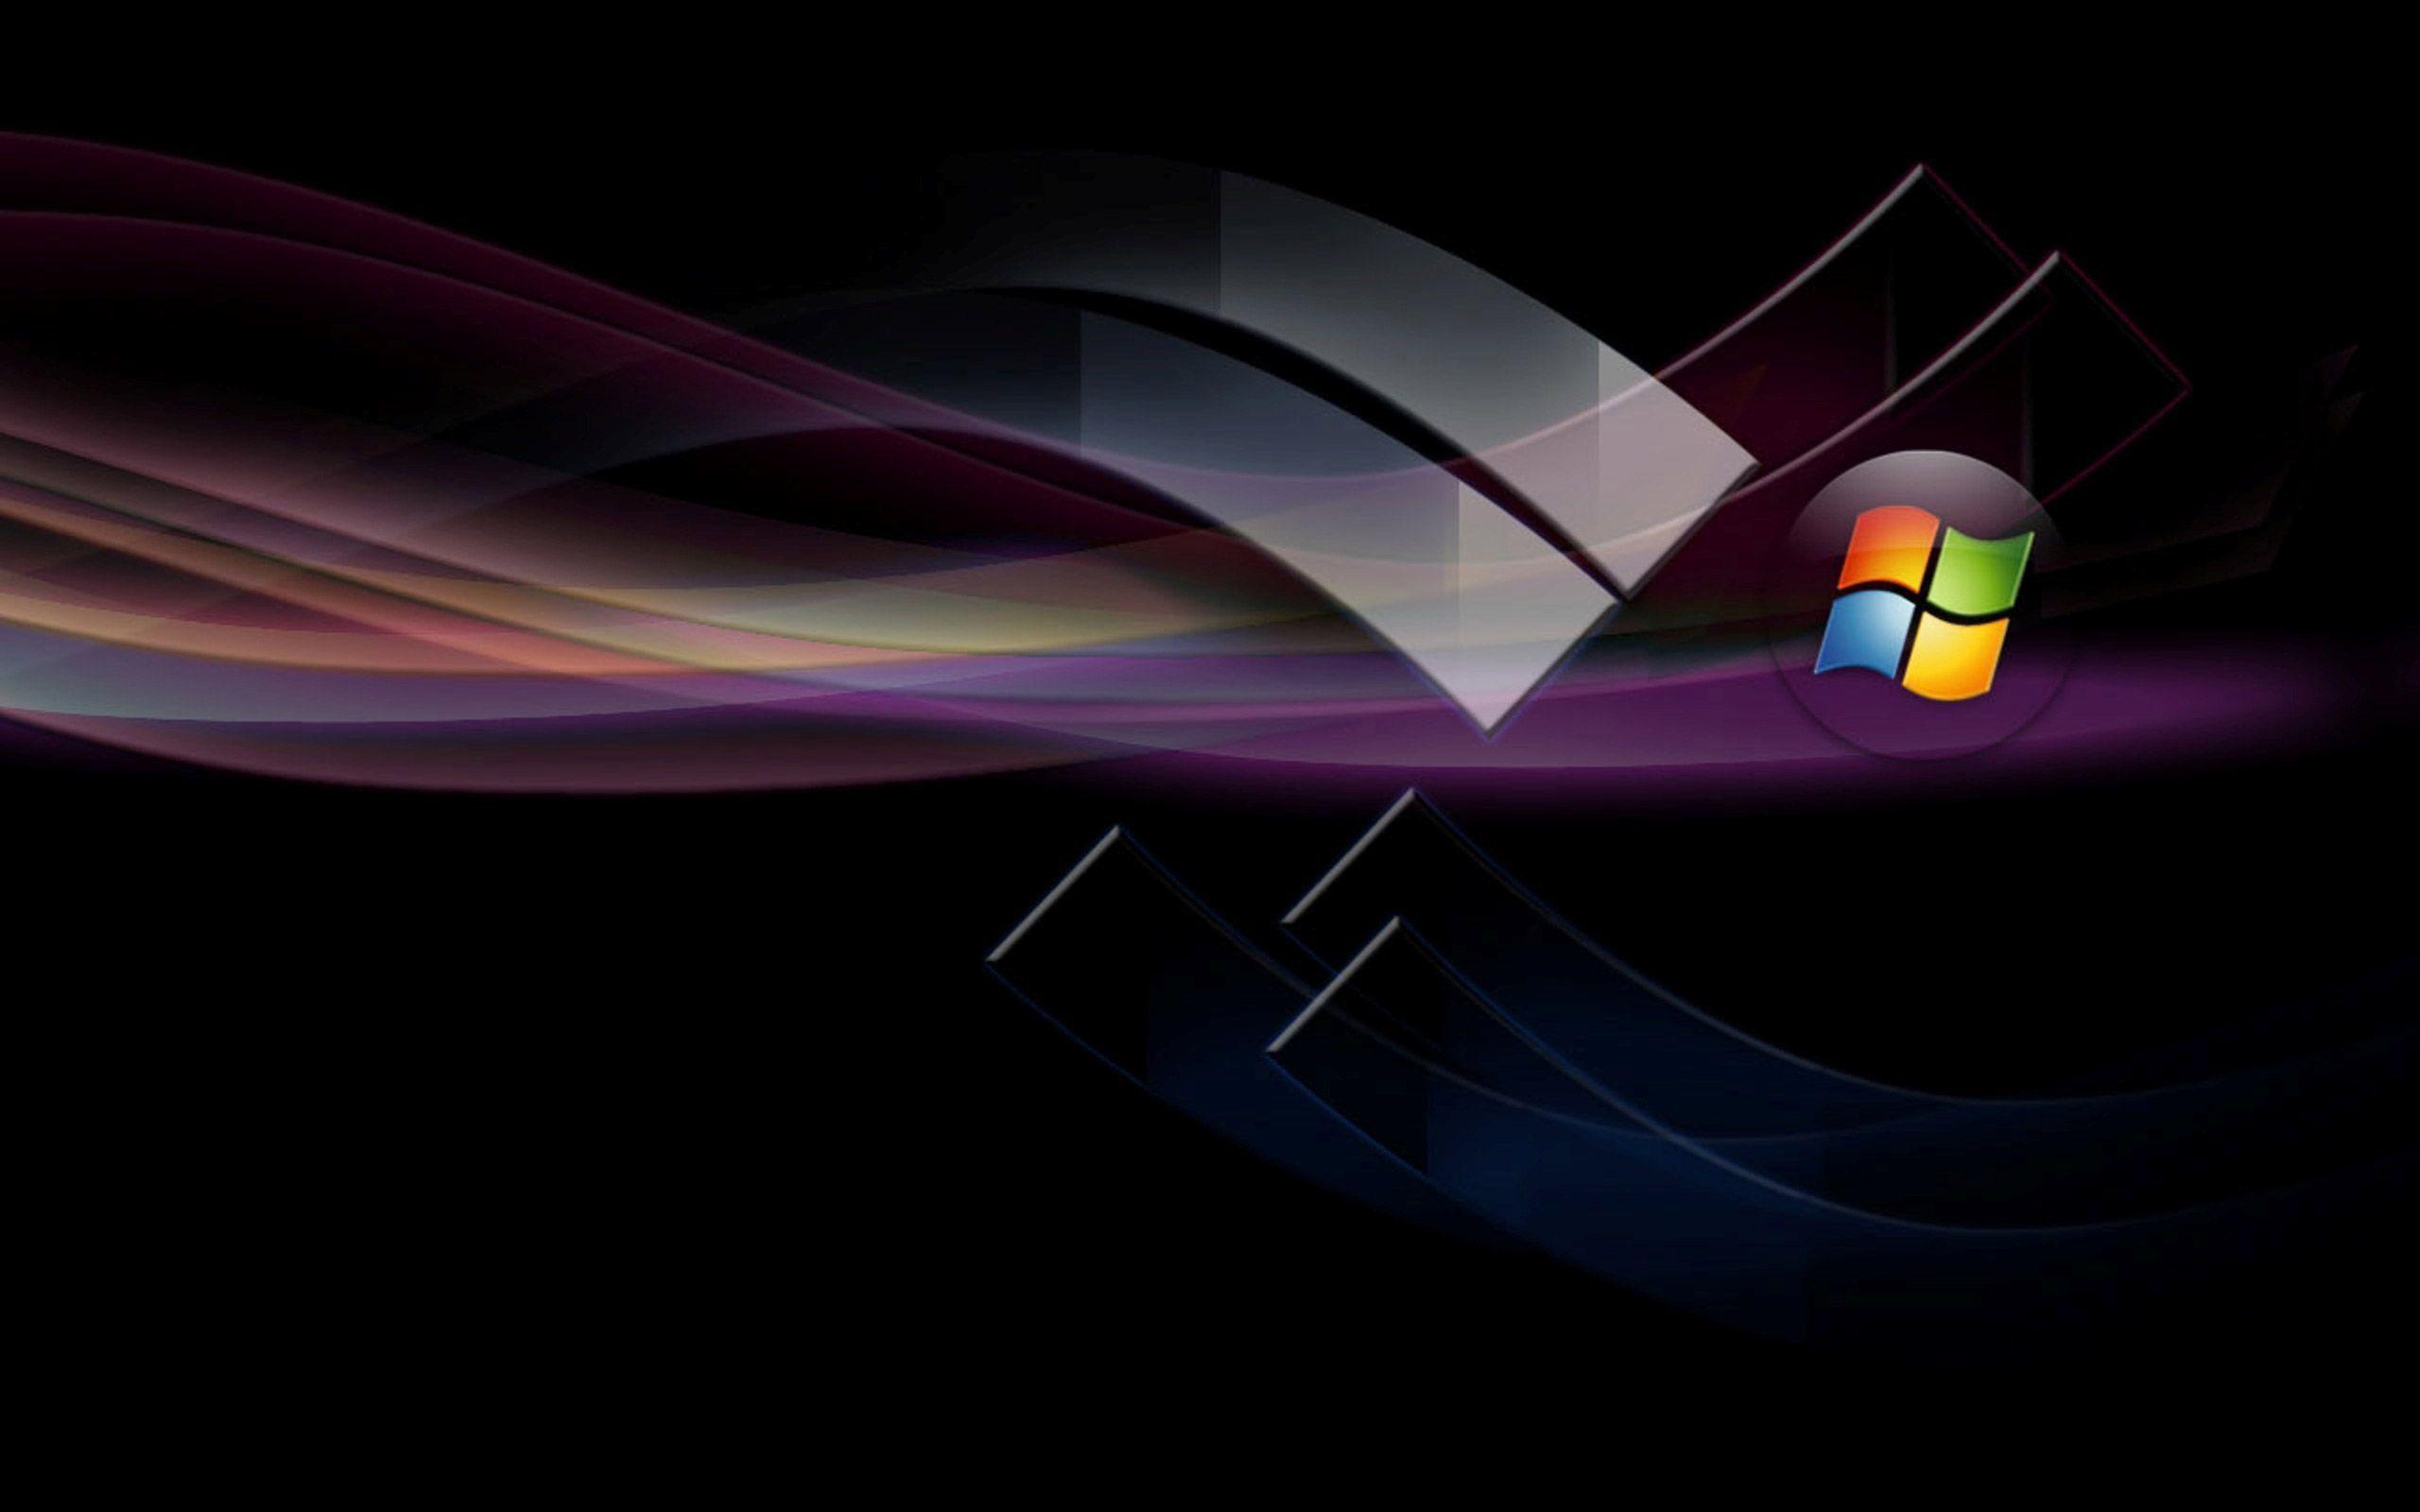 Download 45 HD Windows XP Wallpaper for Free